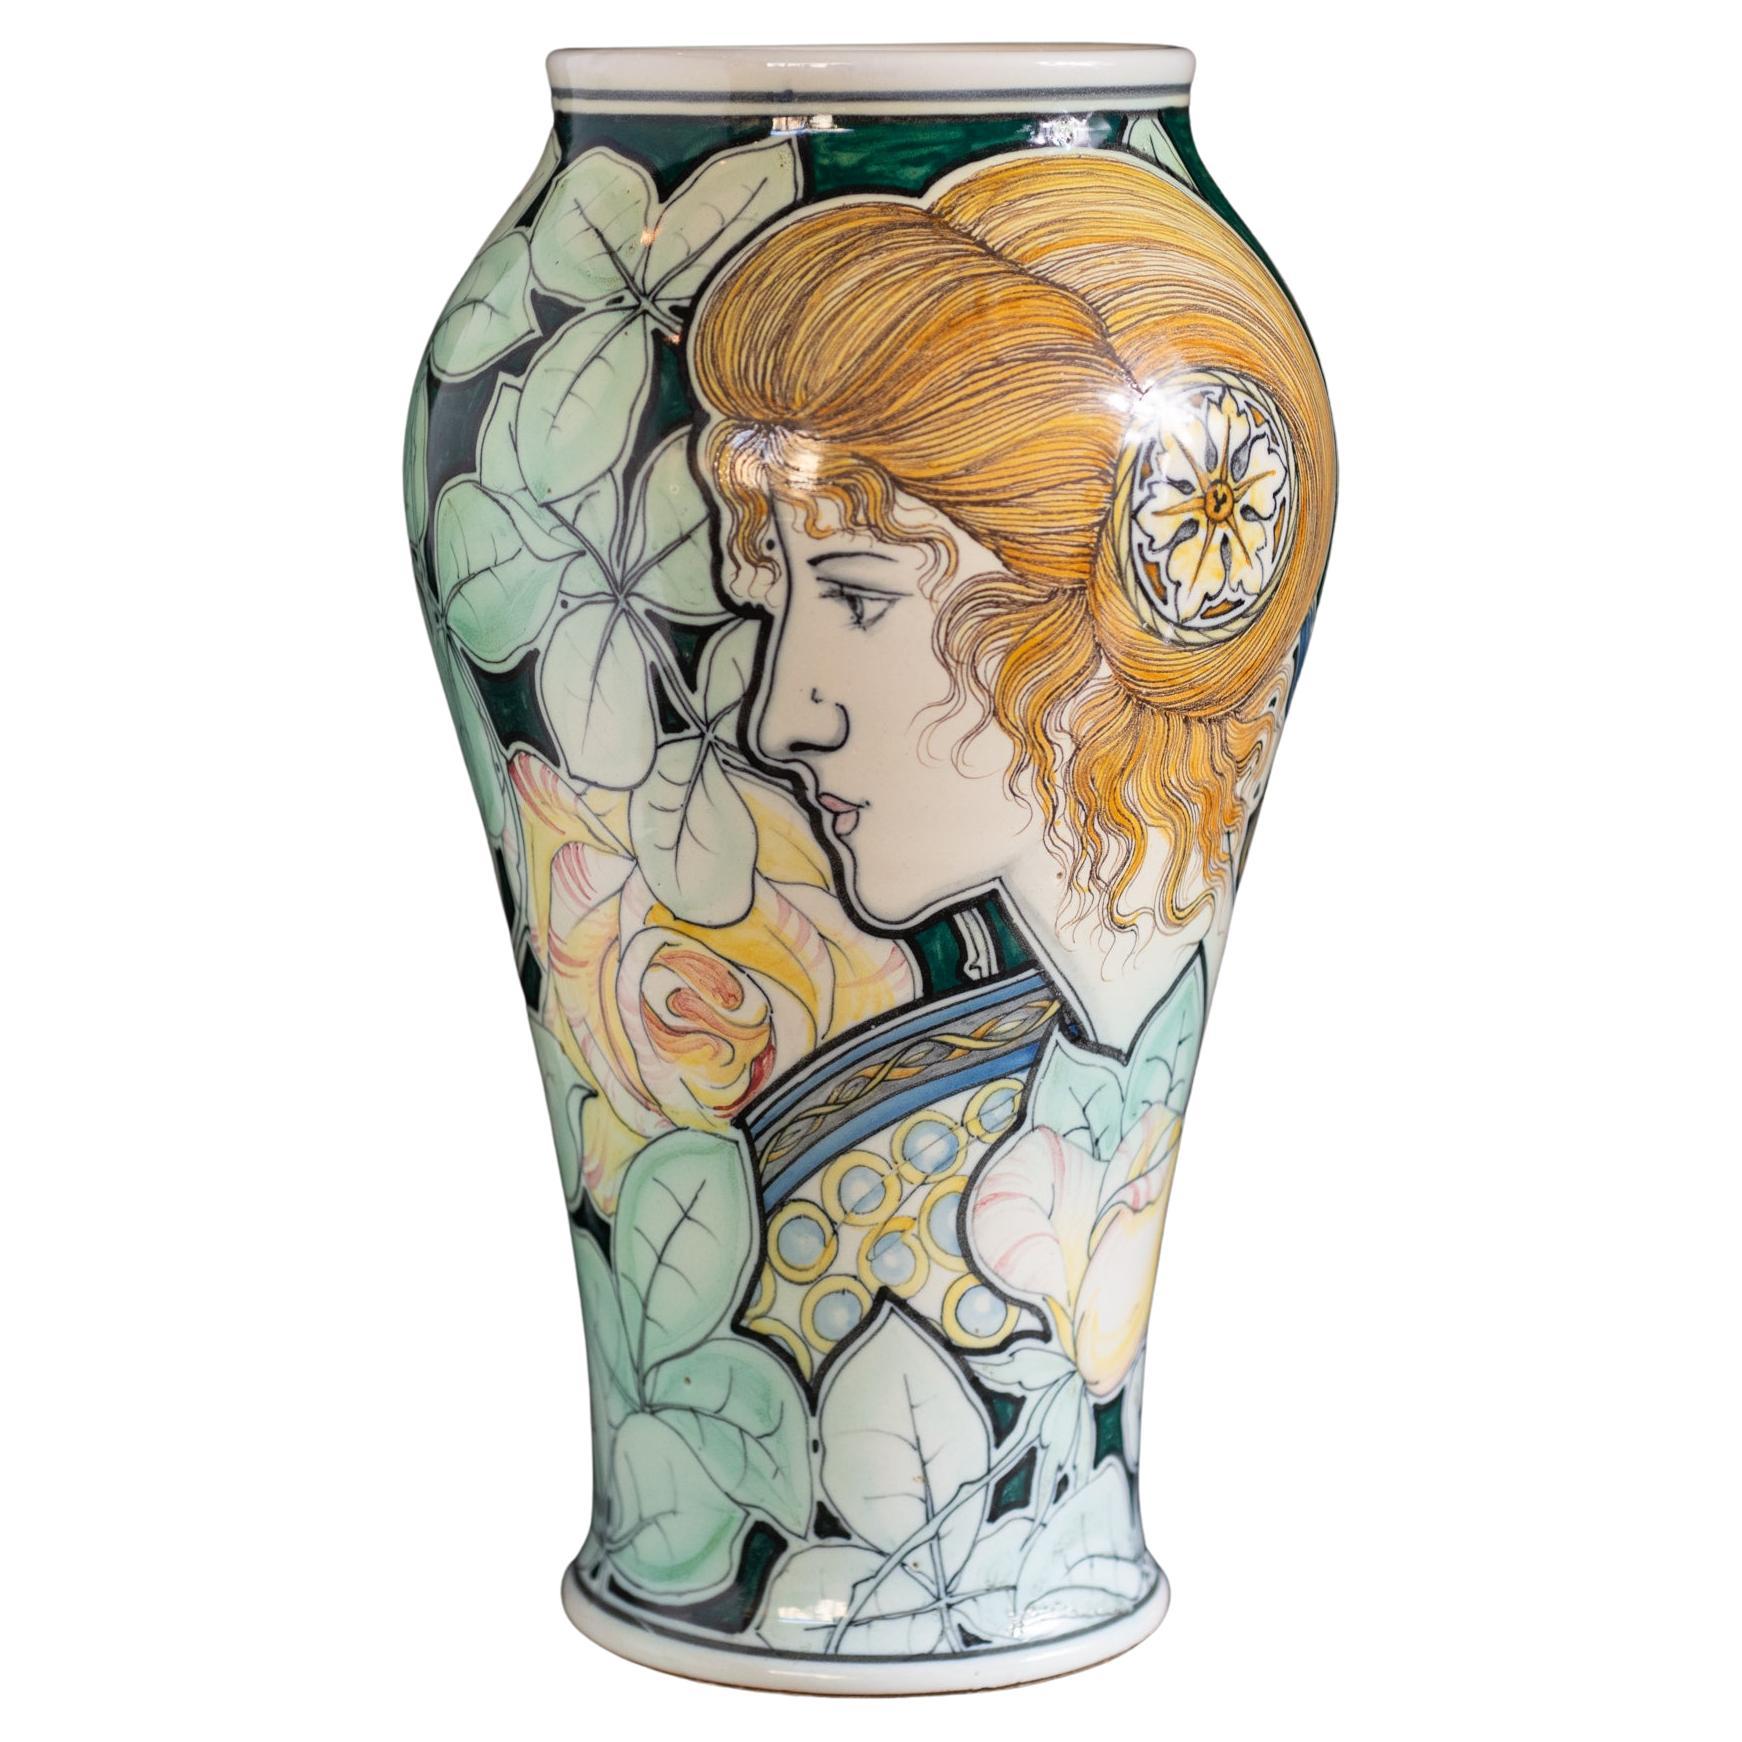 Art Nouveau Stile Liberty Portrait Vase by Galileo Chini